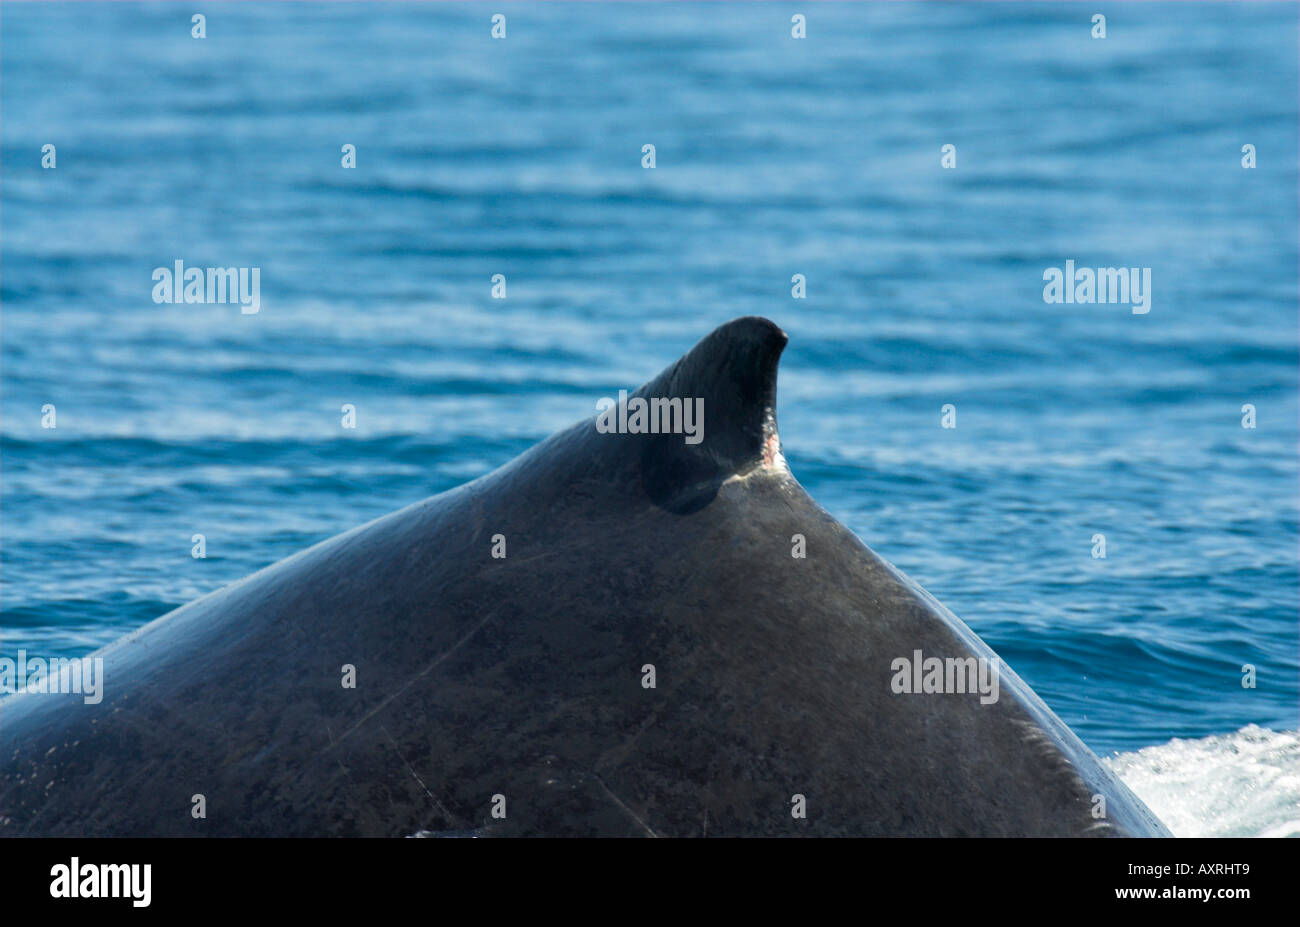 Humpbacked Whale Megapetra novaengliae Stock Photo